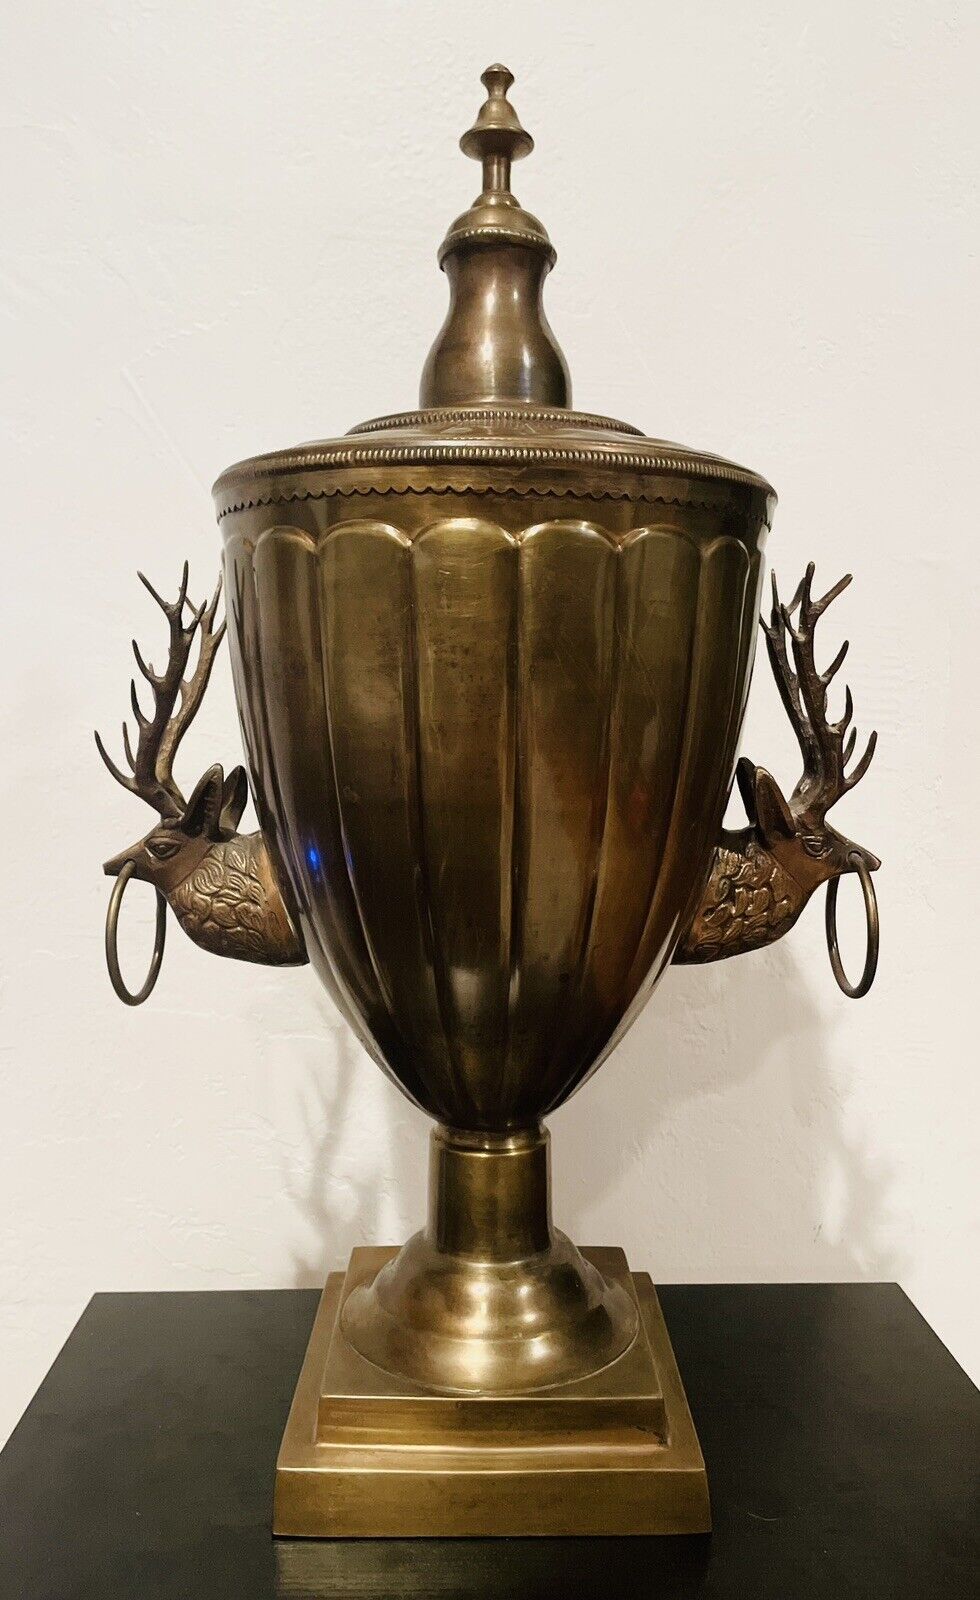 Antique Lidded Brass Urn with Deer Stag Handles